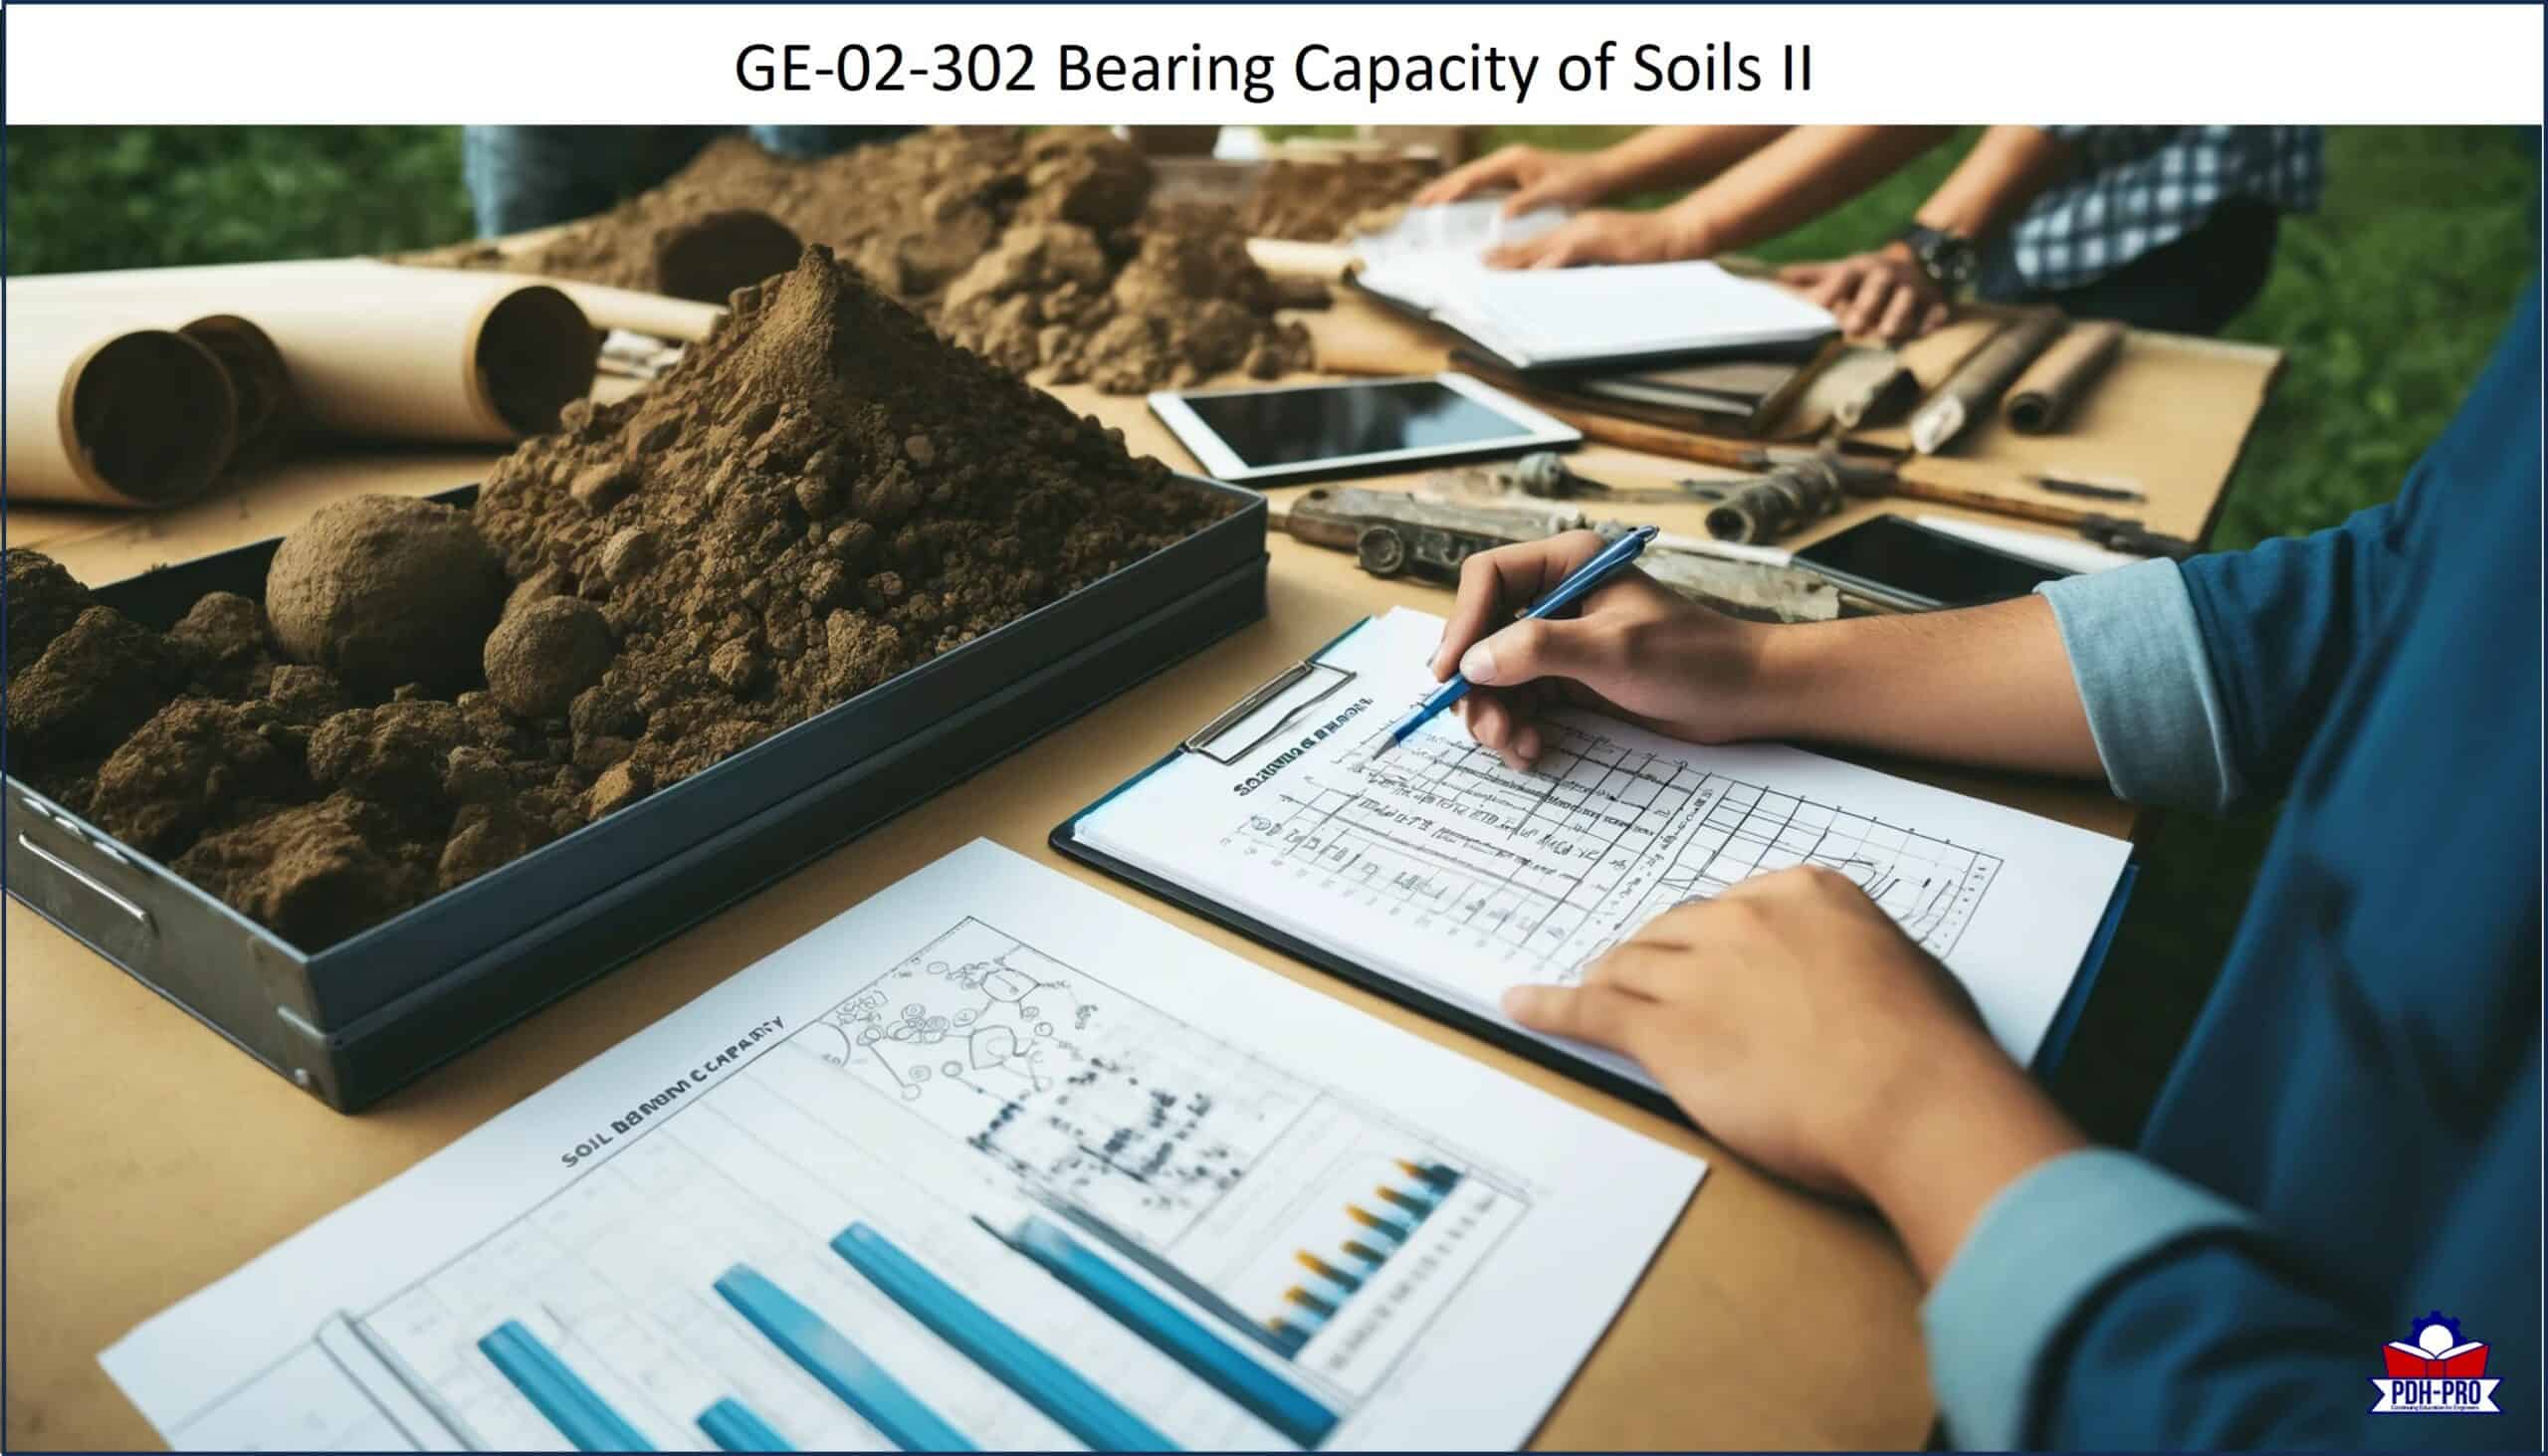 Bearing Capacity of Soils II